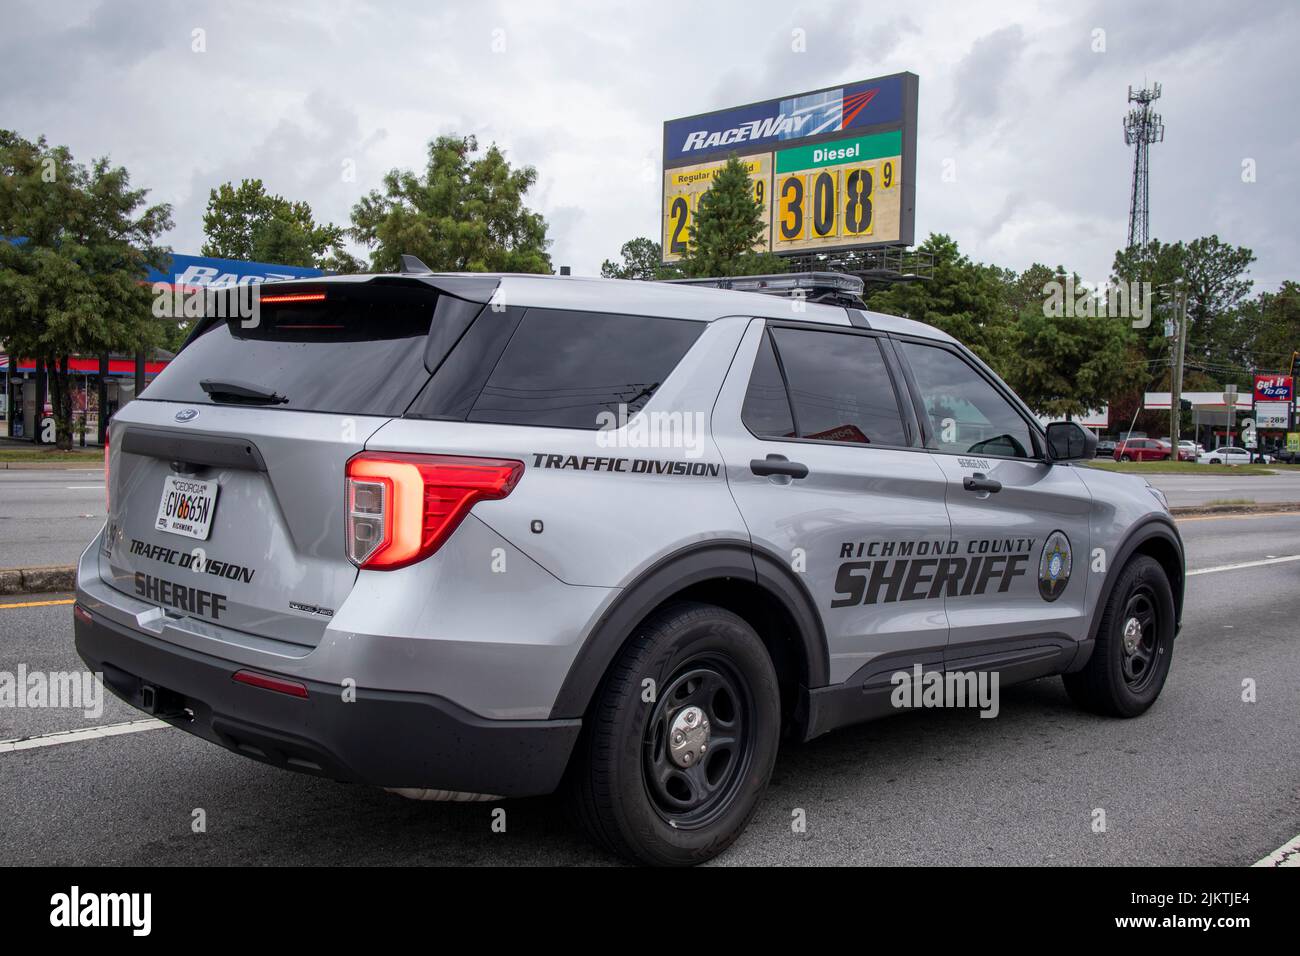 Richmond County, Ga USA - 08 20 21: Richmond County Police SUV on the road back view Stock Photo